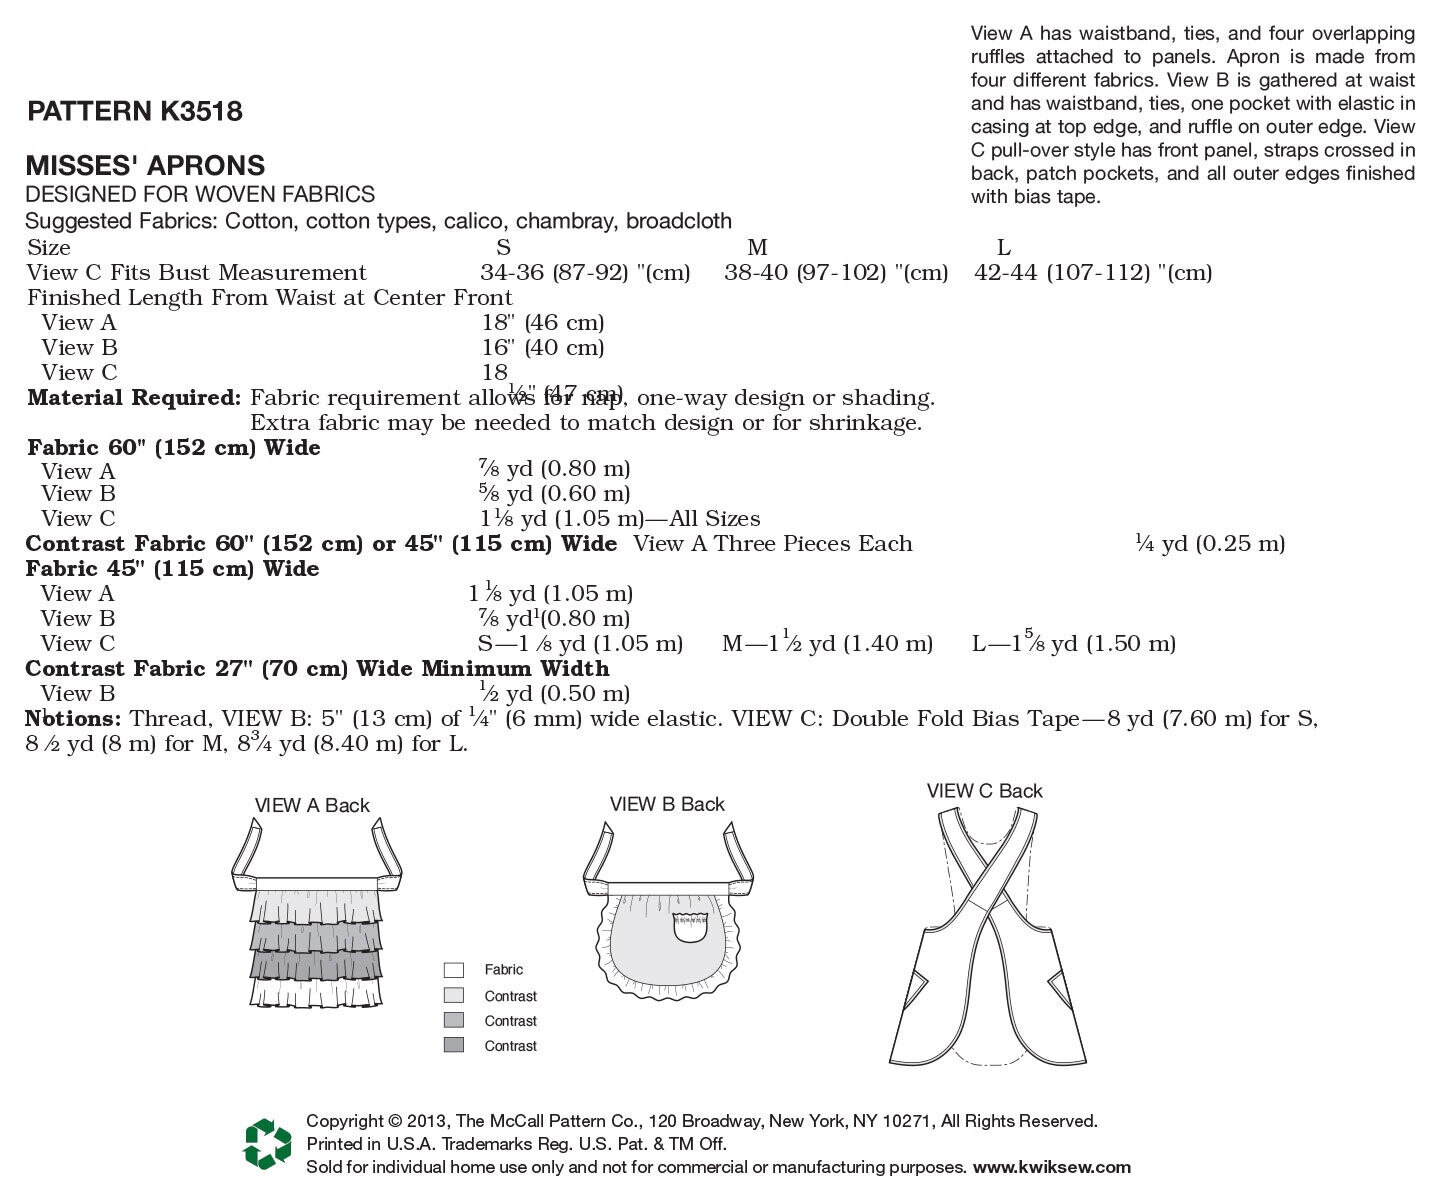 Kwik Sew K3518 Pattern Misses Aprons Sizes View A & B OSZ View C S,M,L BN 